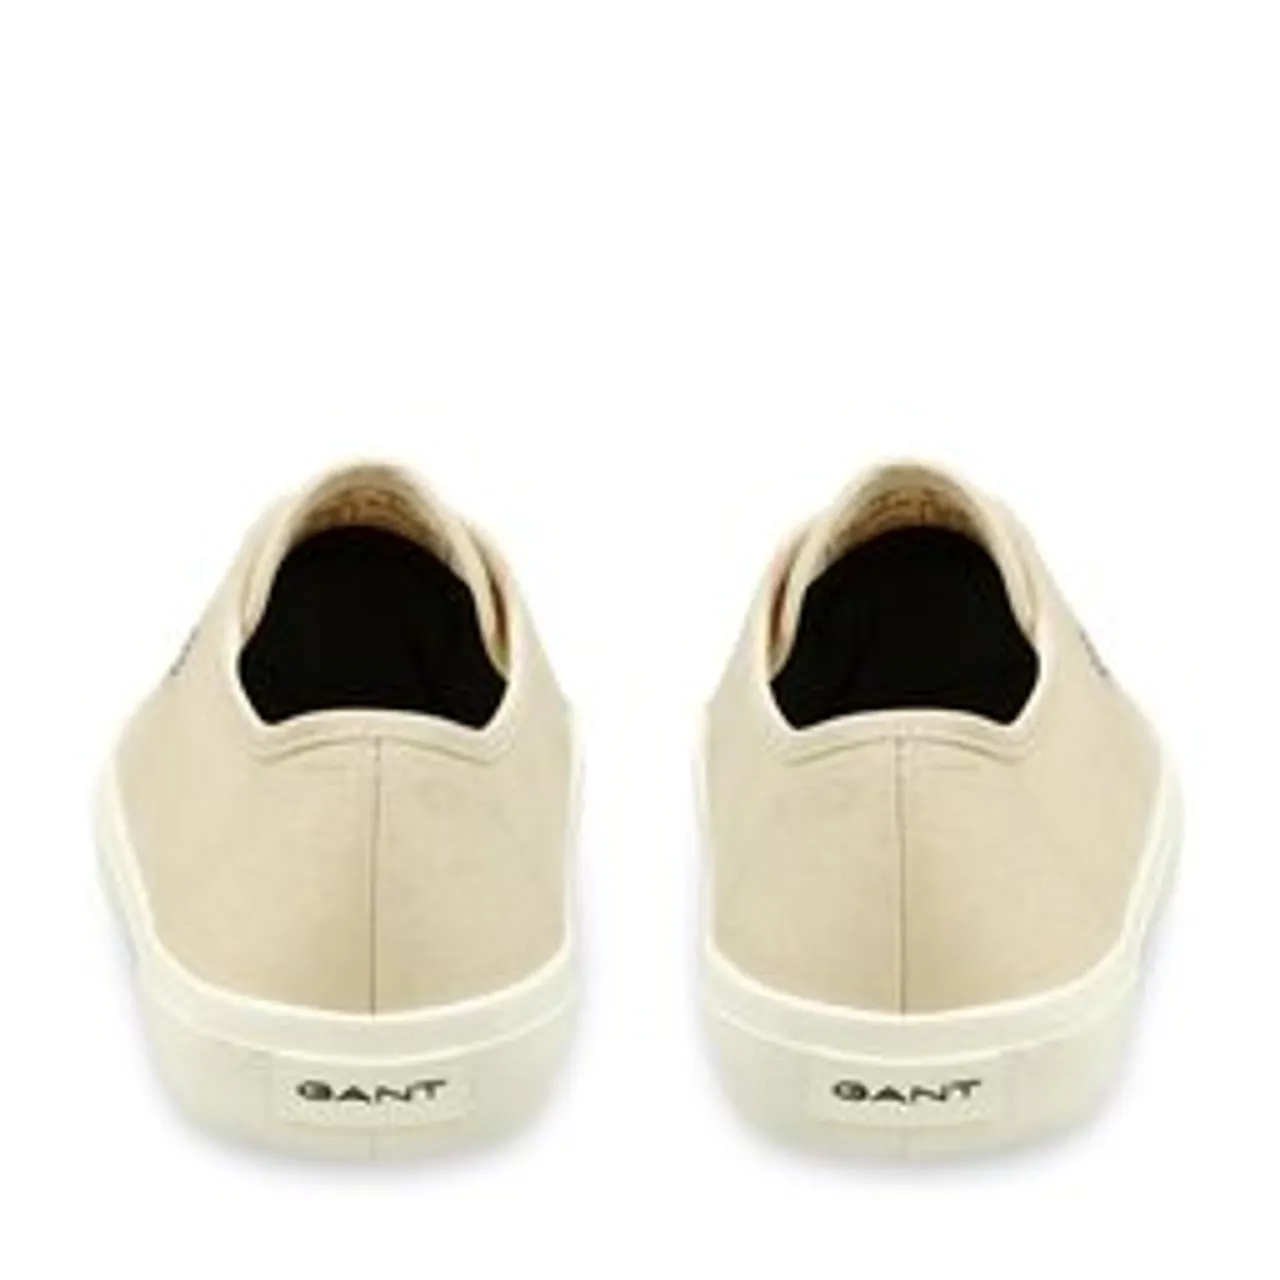 Sneakers aus Stoff Gant Pillox Sneaker 28538605 Dry Sand G22